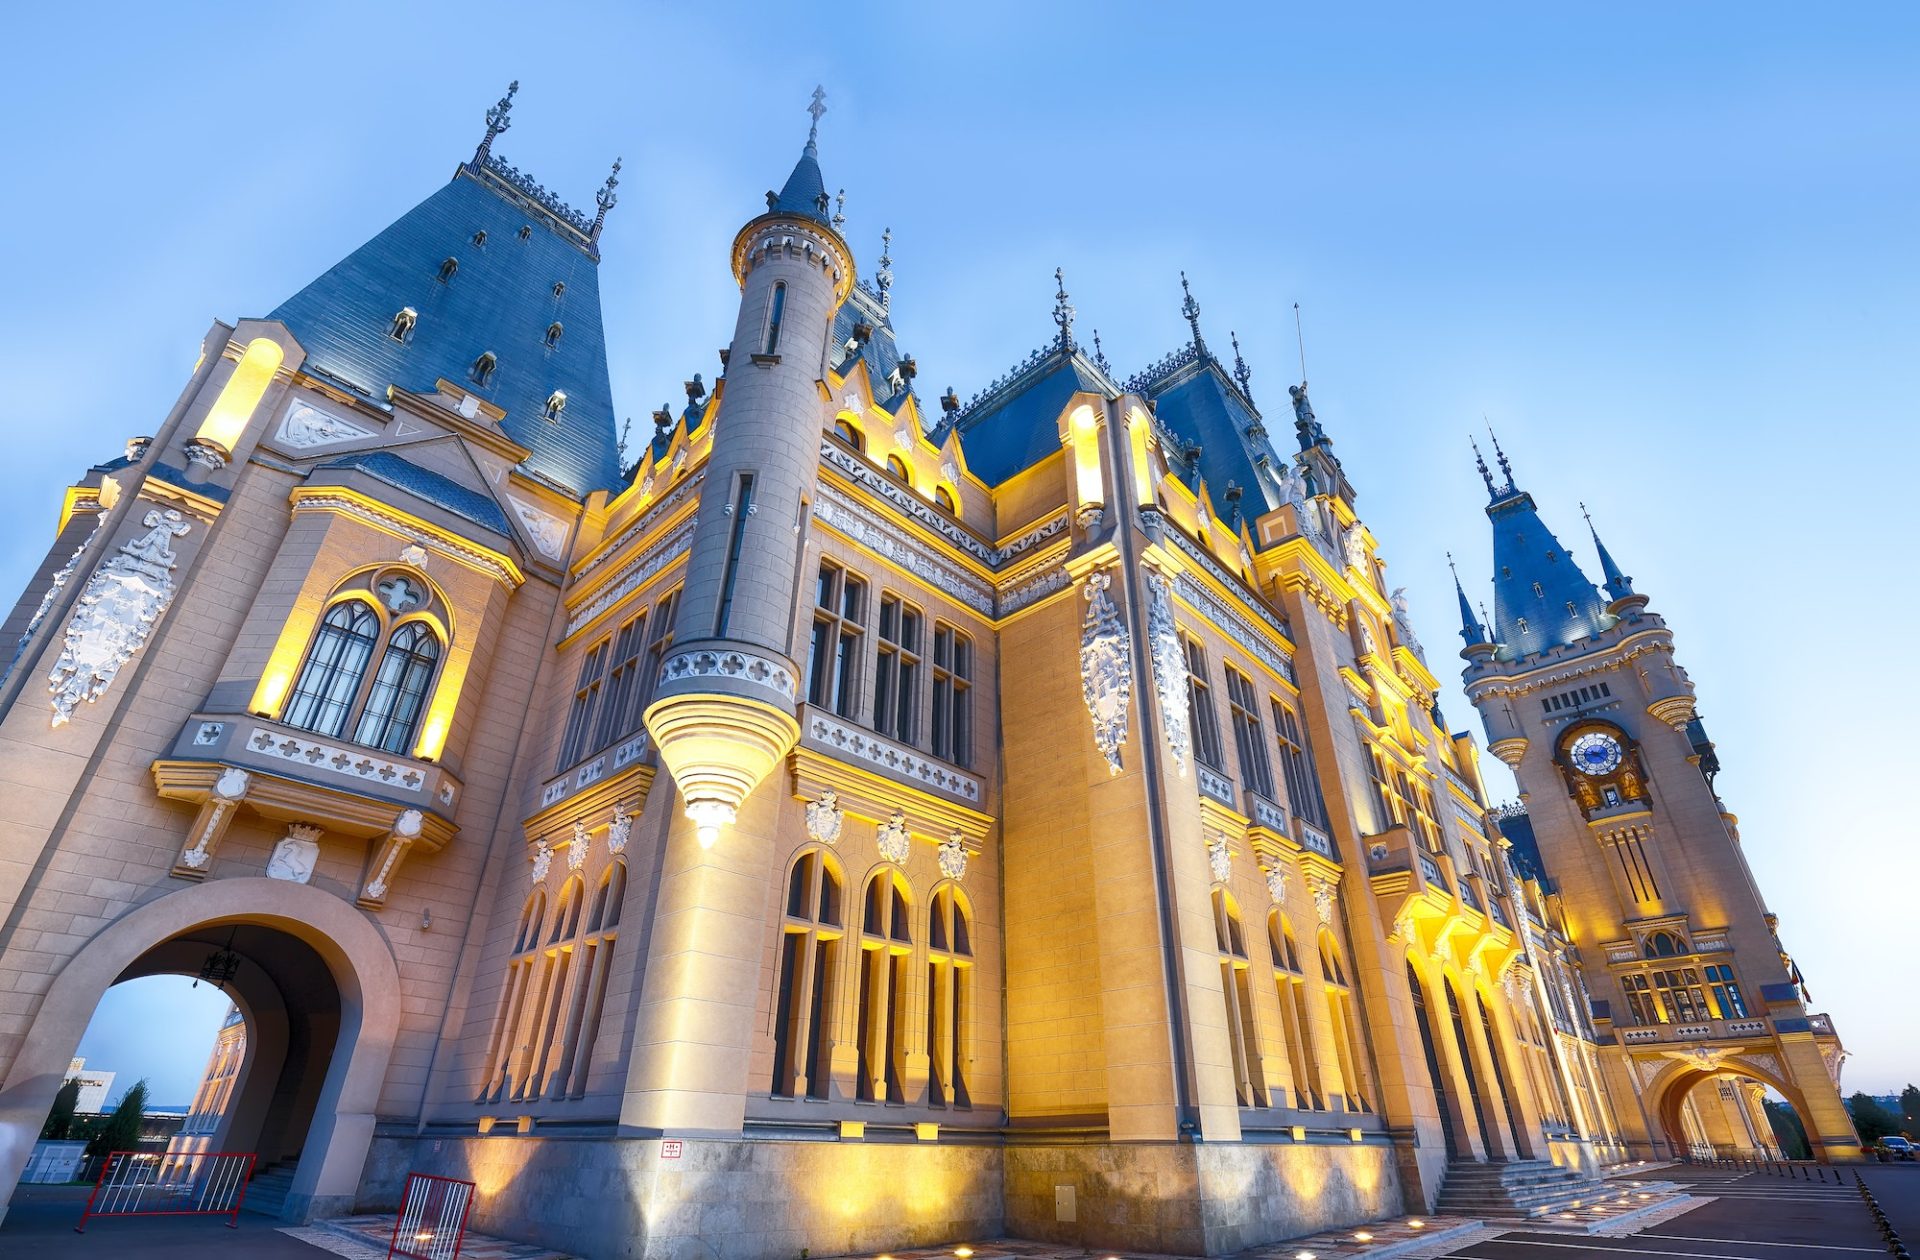 The Palace of Culture edifice in Iasi, Romania.